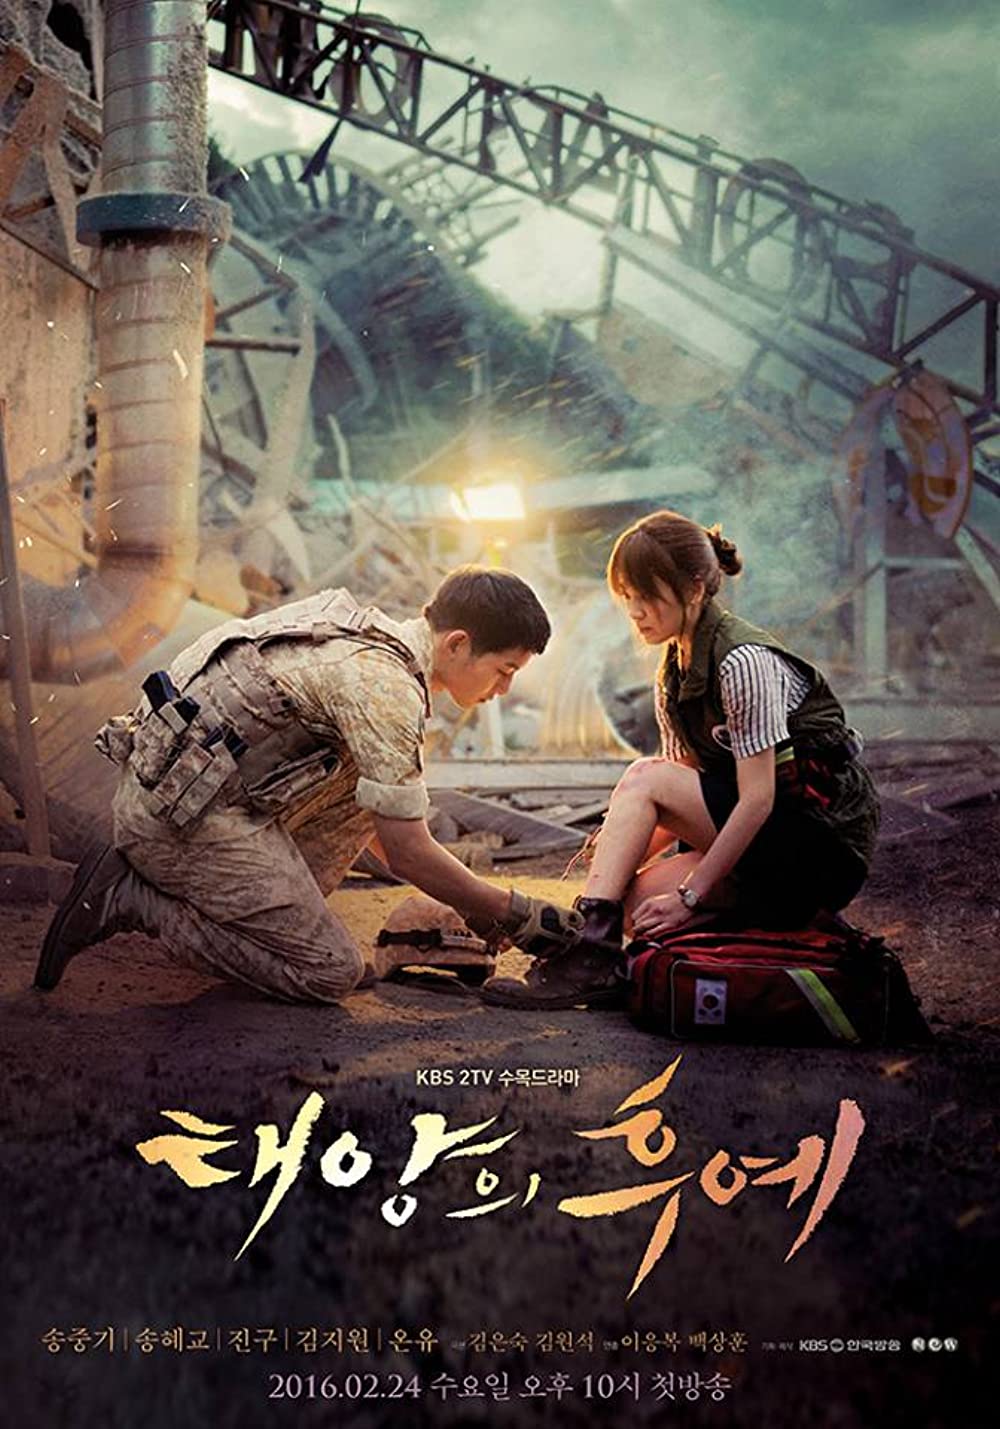 7 Drama Korea romantis para tentara, kisah perang berbalut cinta